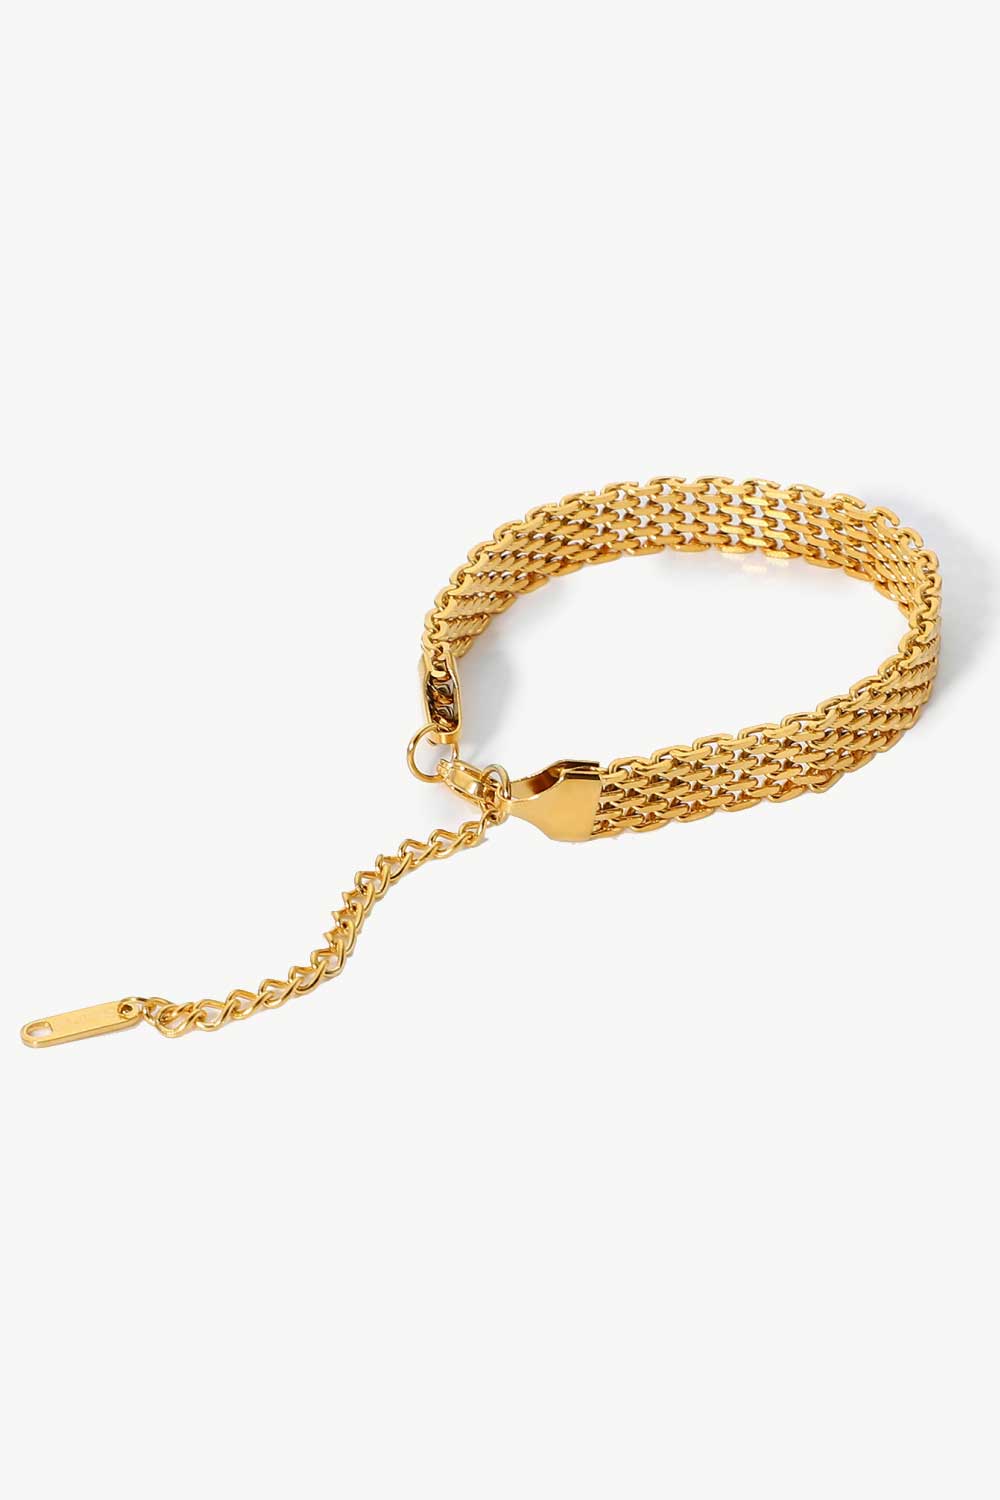 18K Gold-Plated Wide Chain Bracelet - Gold / One Size - Women’s Jewelry - Bracelets - 3 - 2024